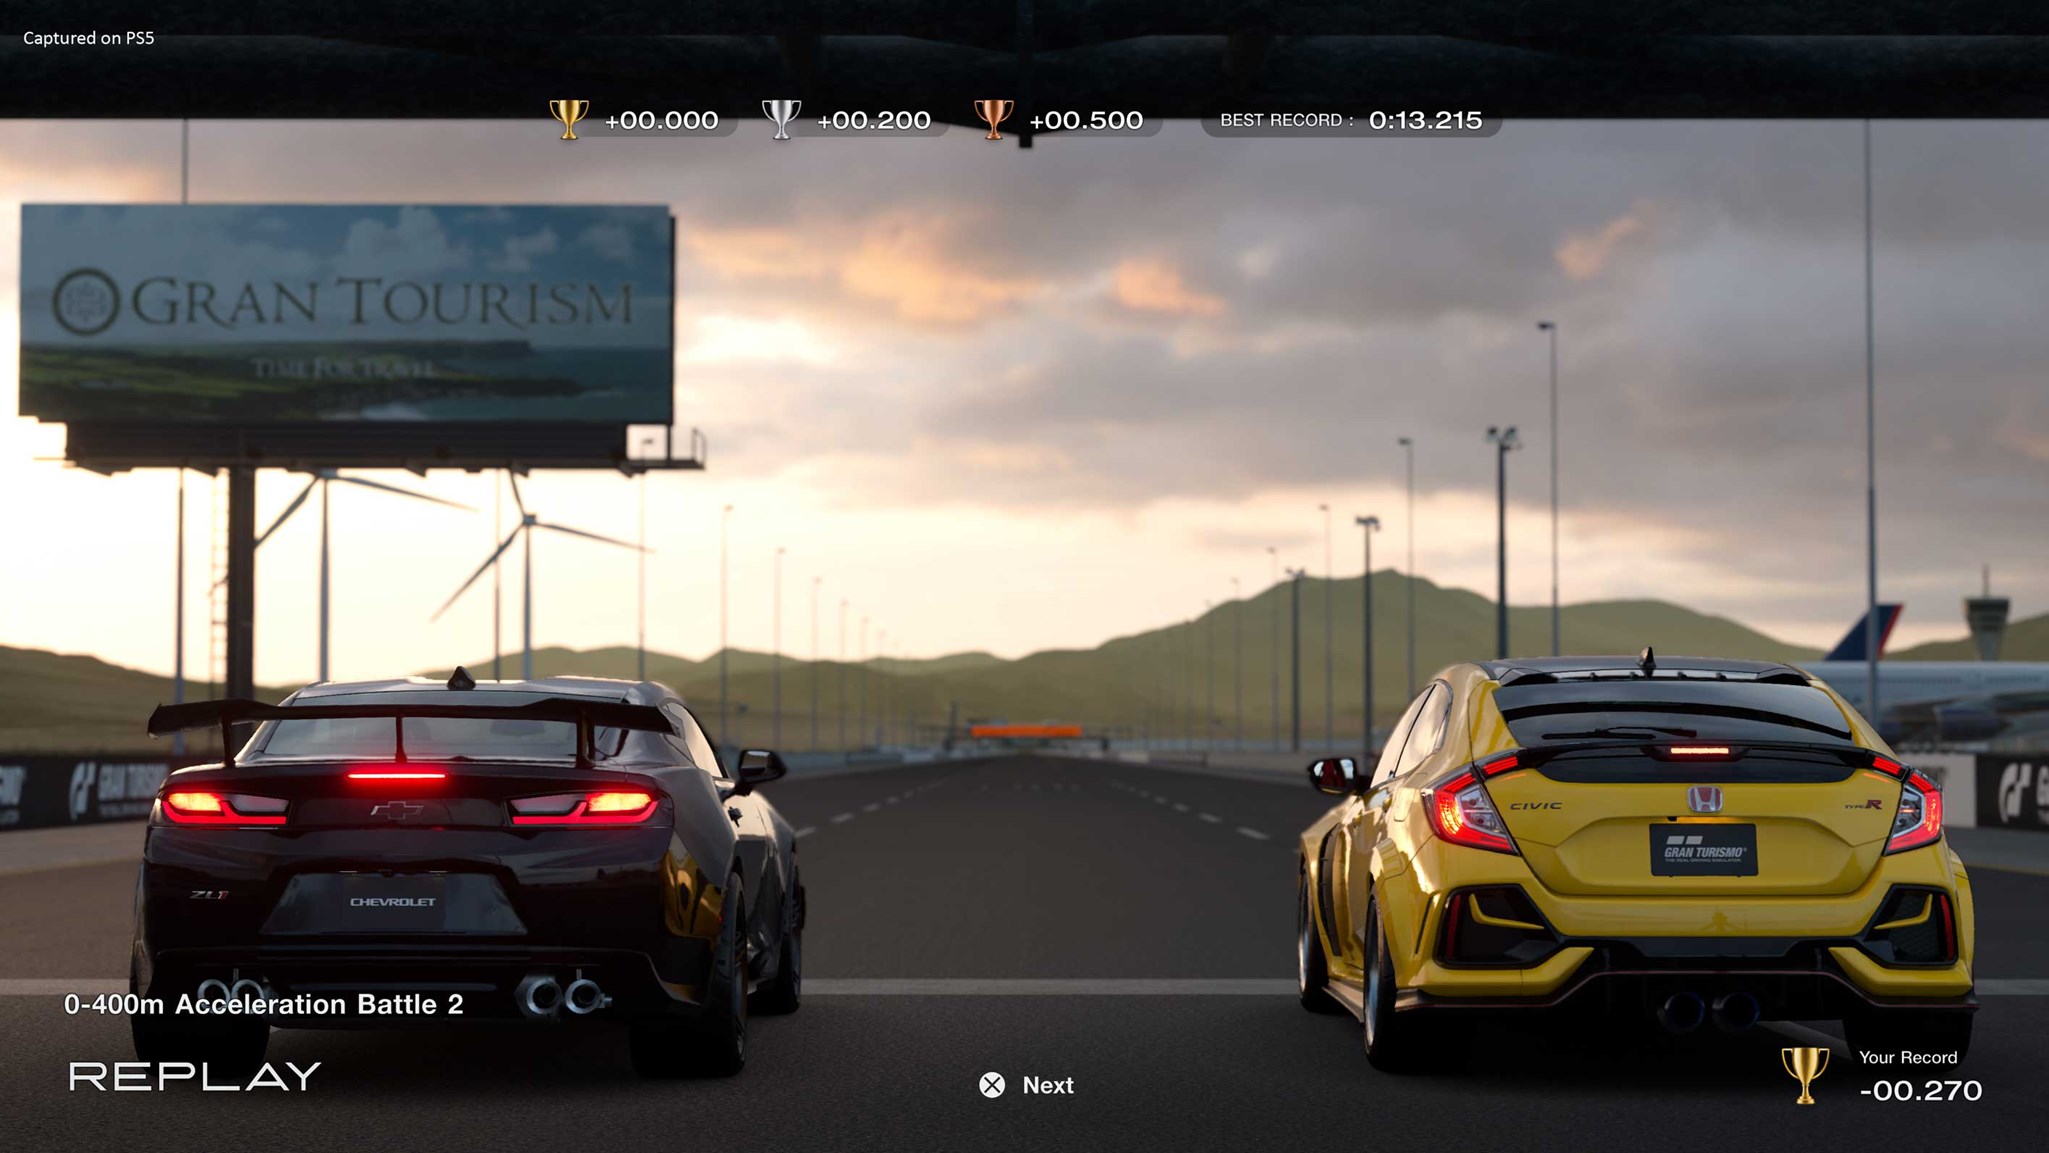 Forza Horizon 5 and Gran Turismo 7 get new cars, photo mode updates